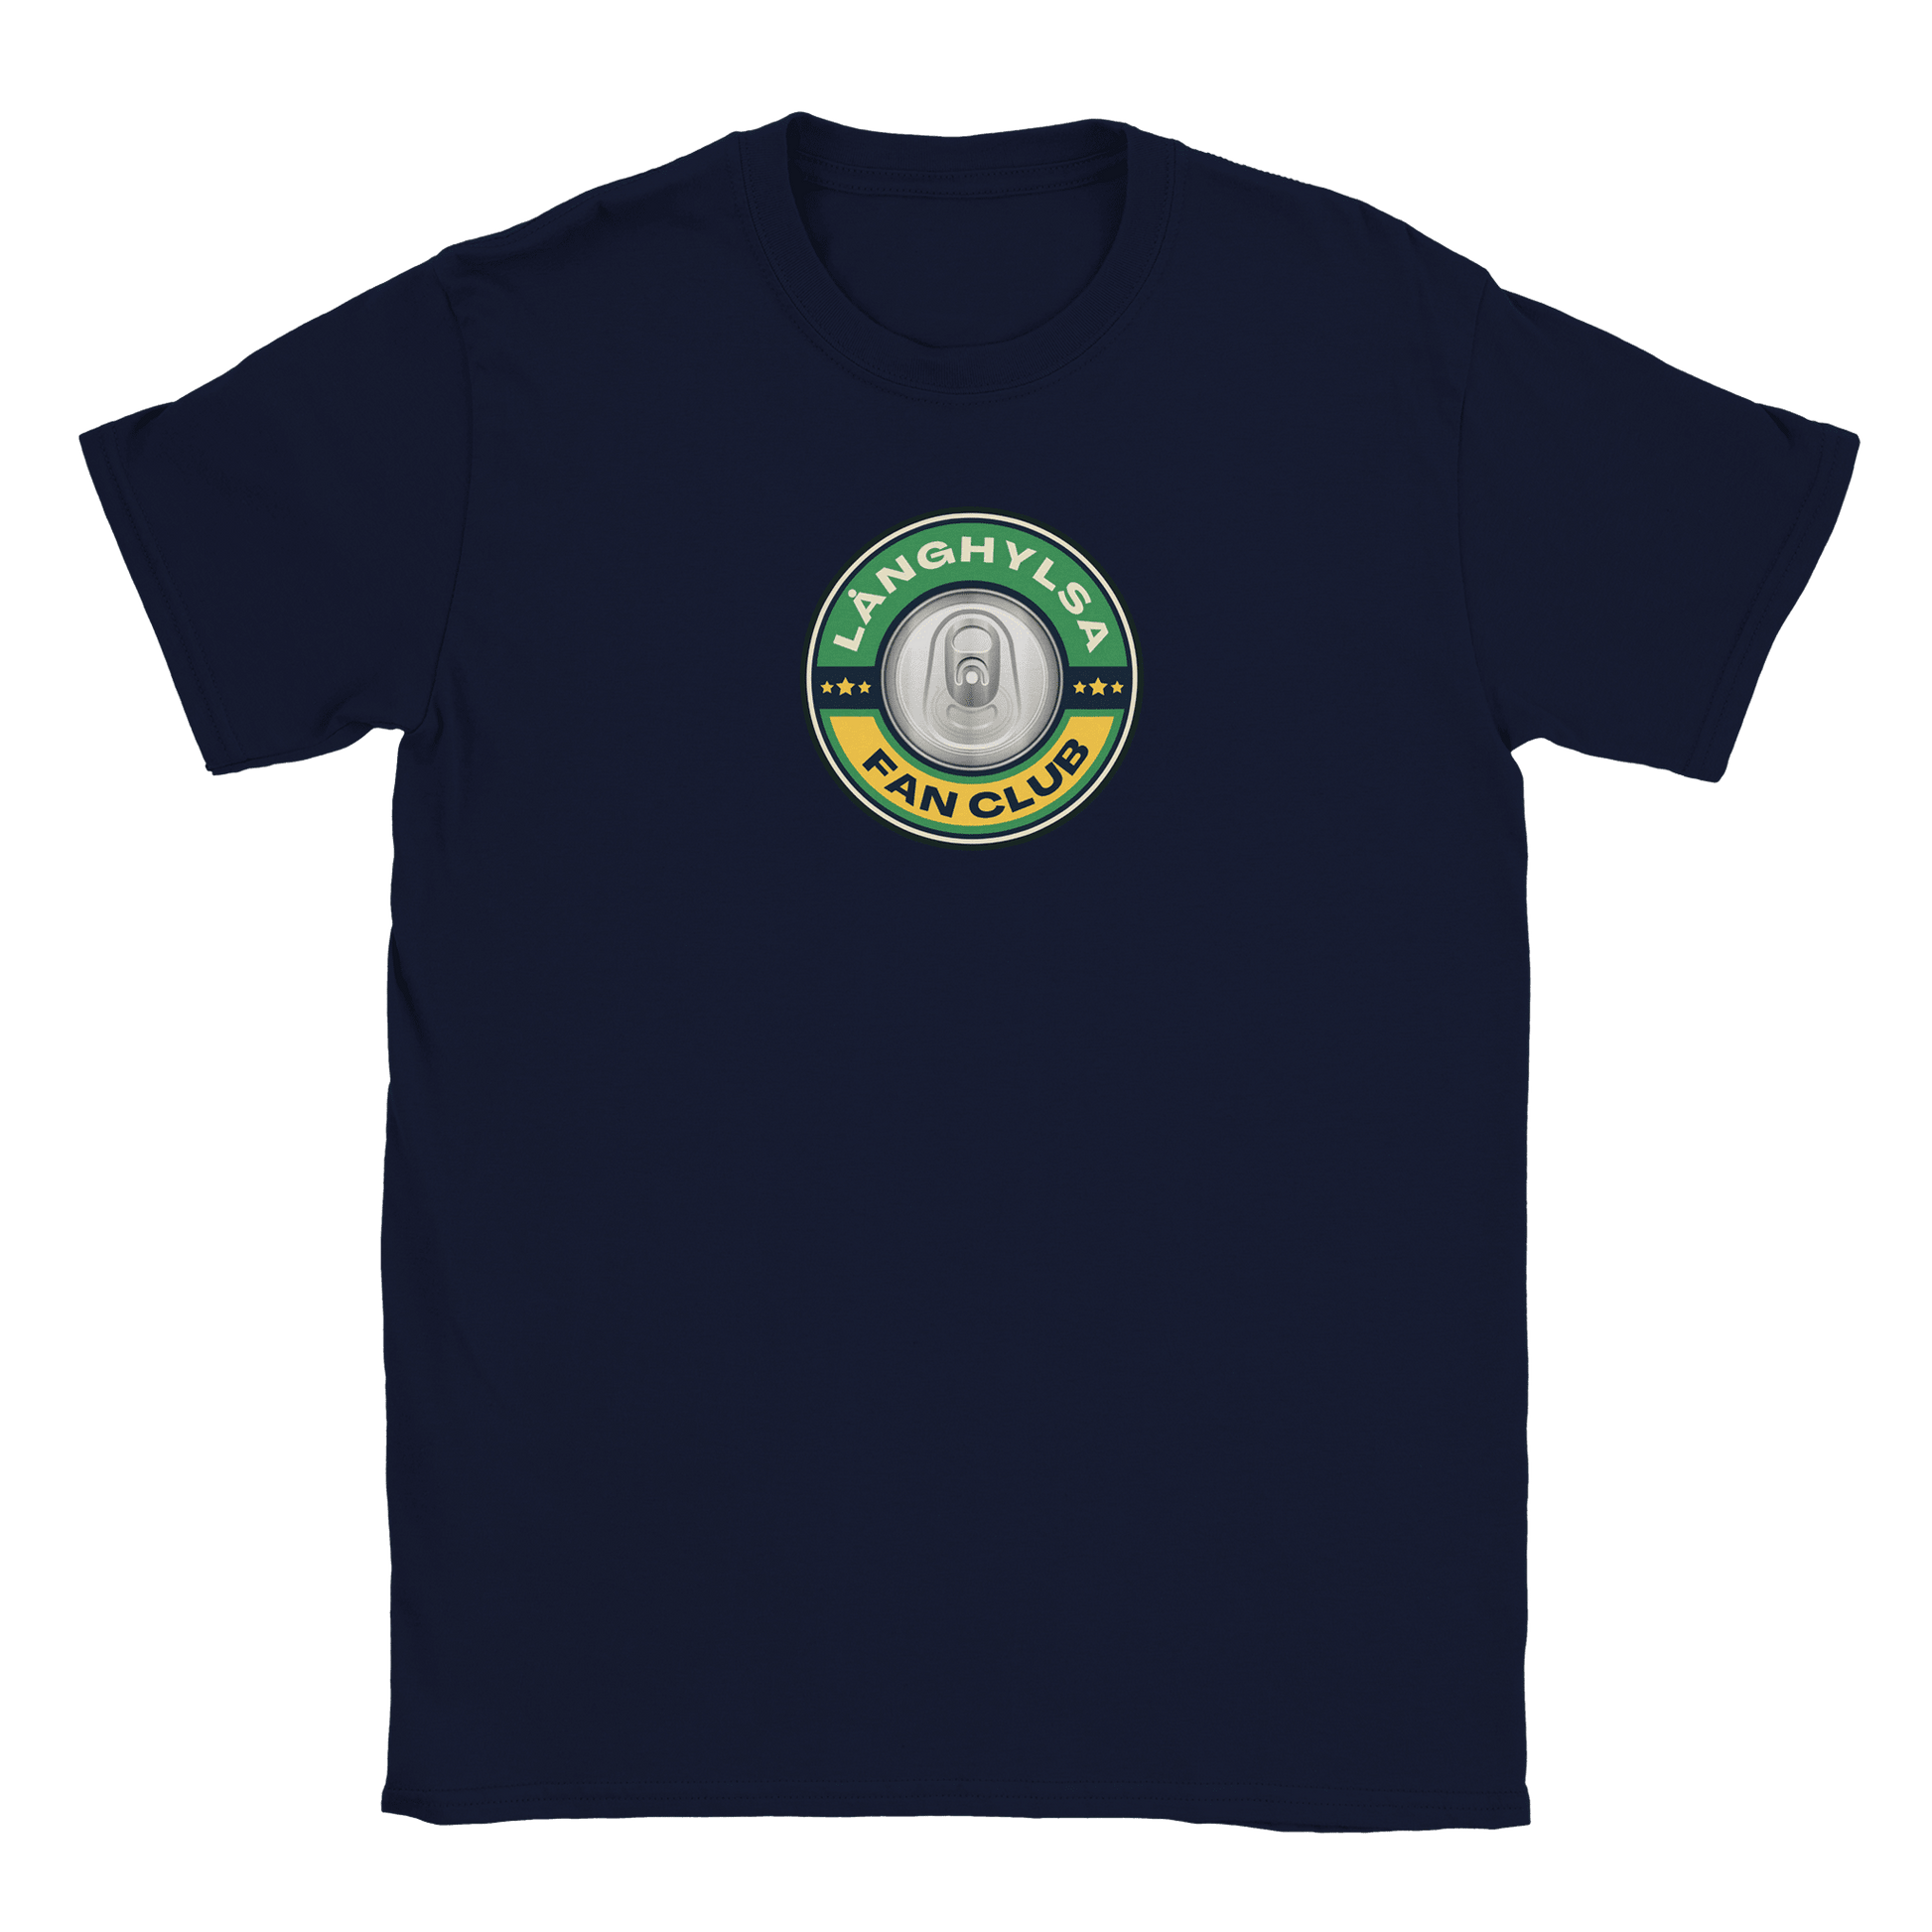 Långhylsa Fan Club - T-shirt Navy